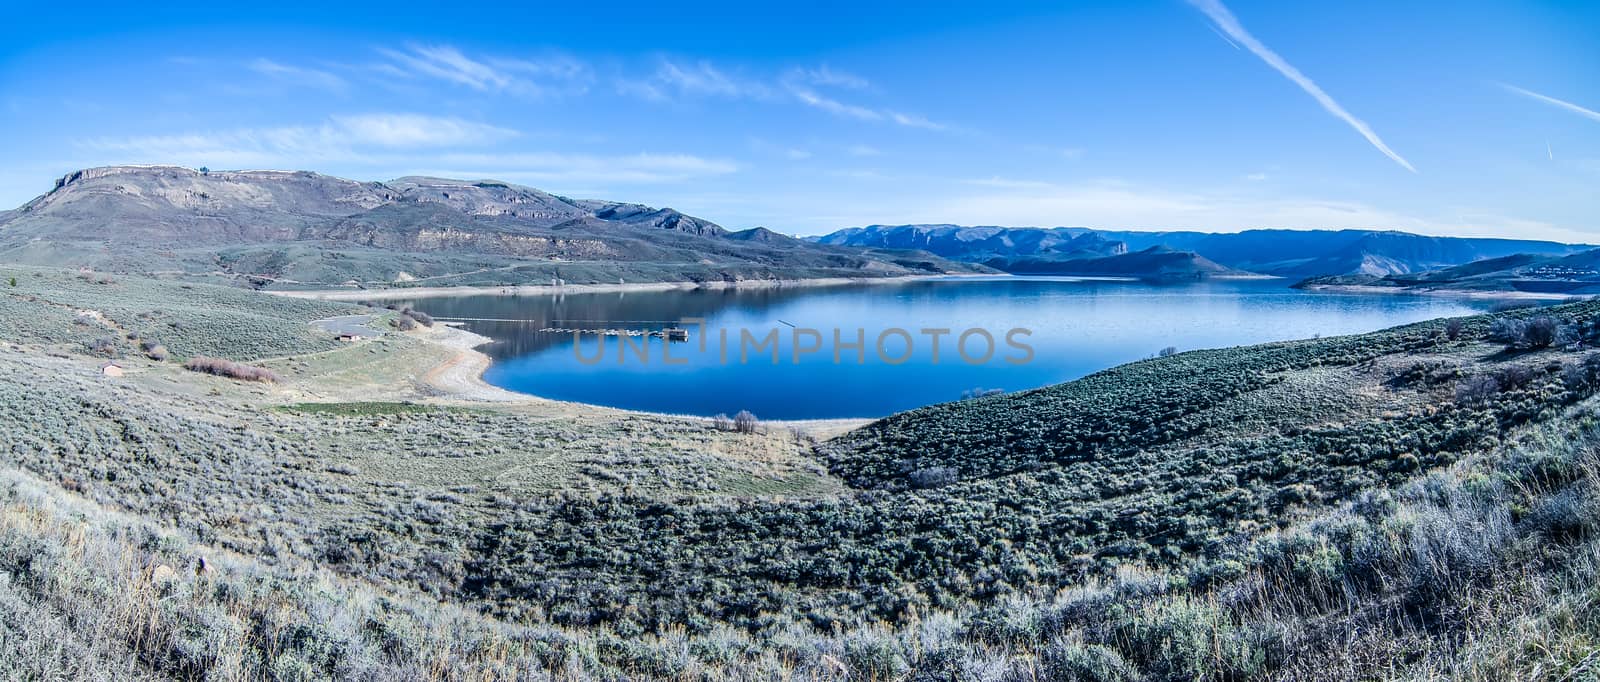 blue mesa reservoir in gunnison national forest colorado by digidreamgrafix